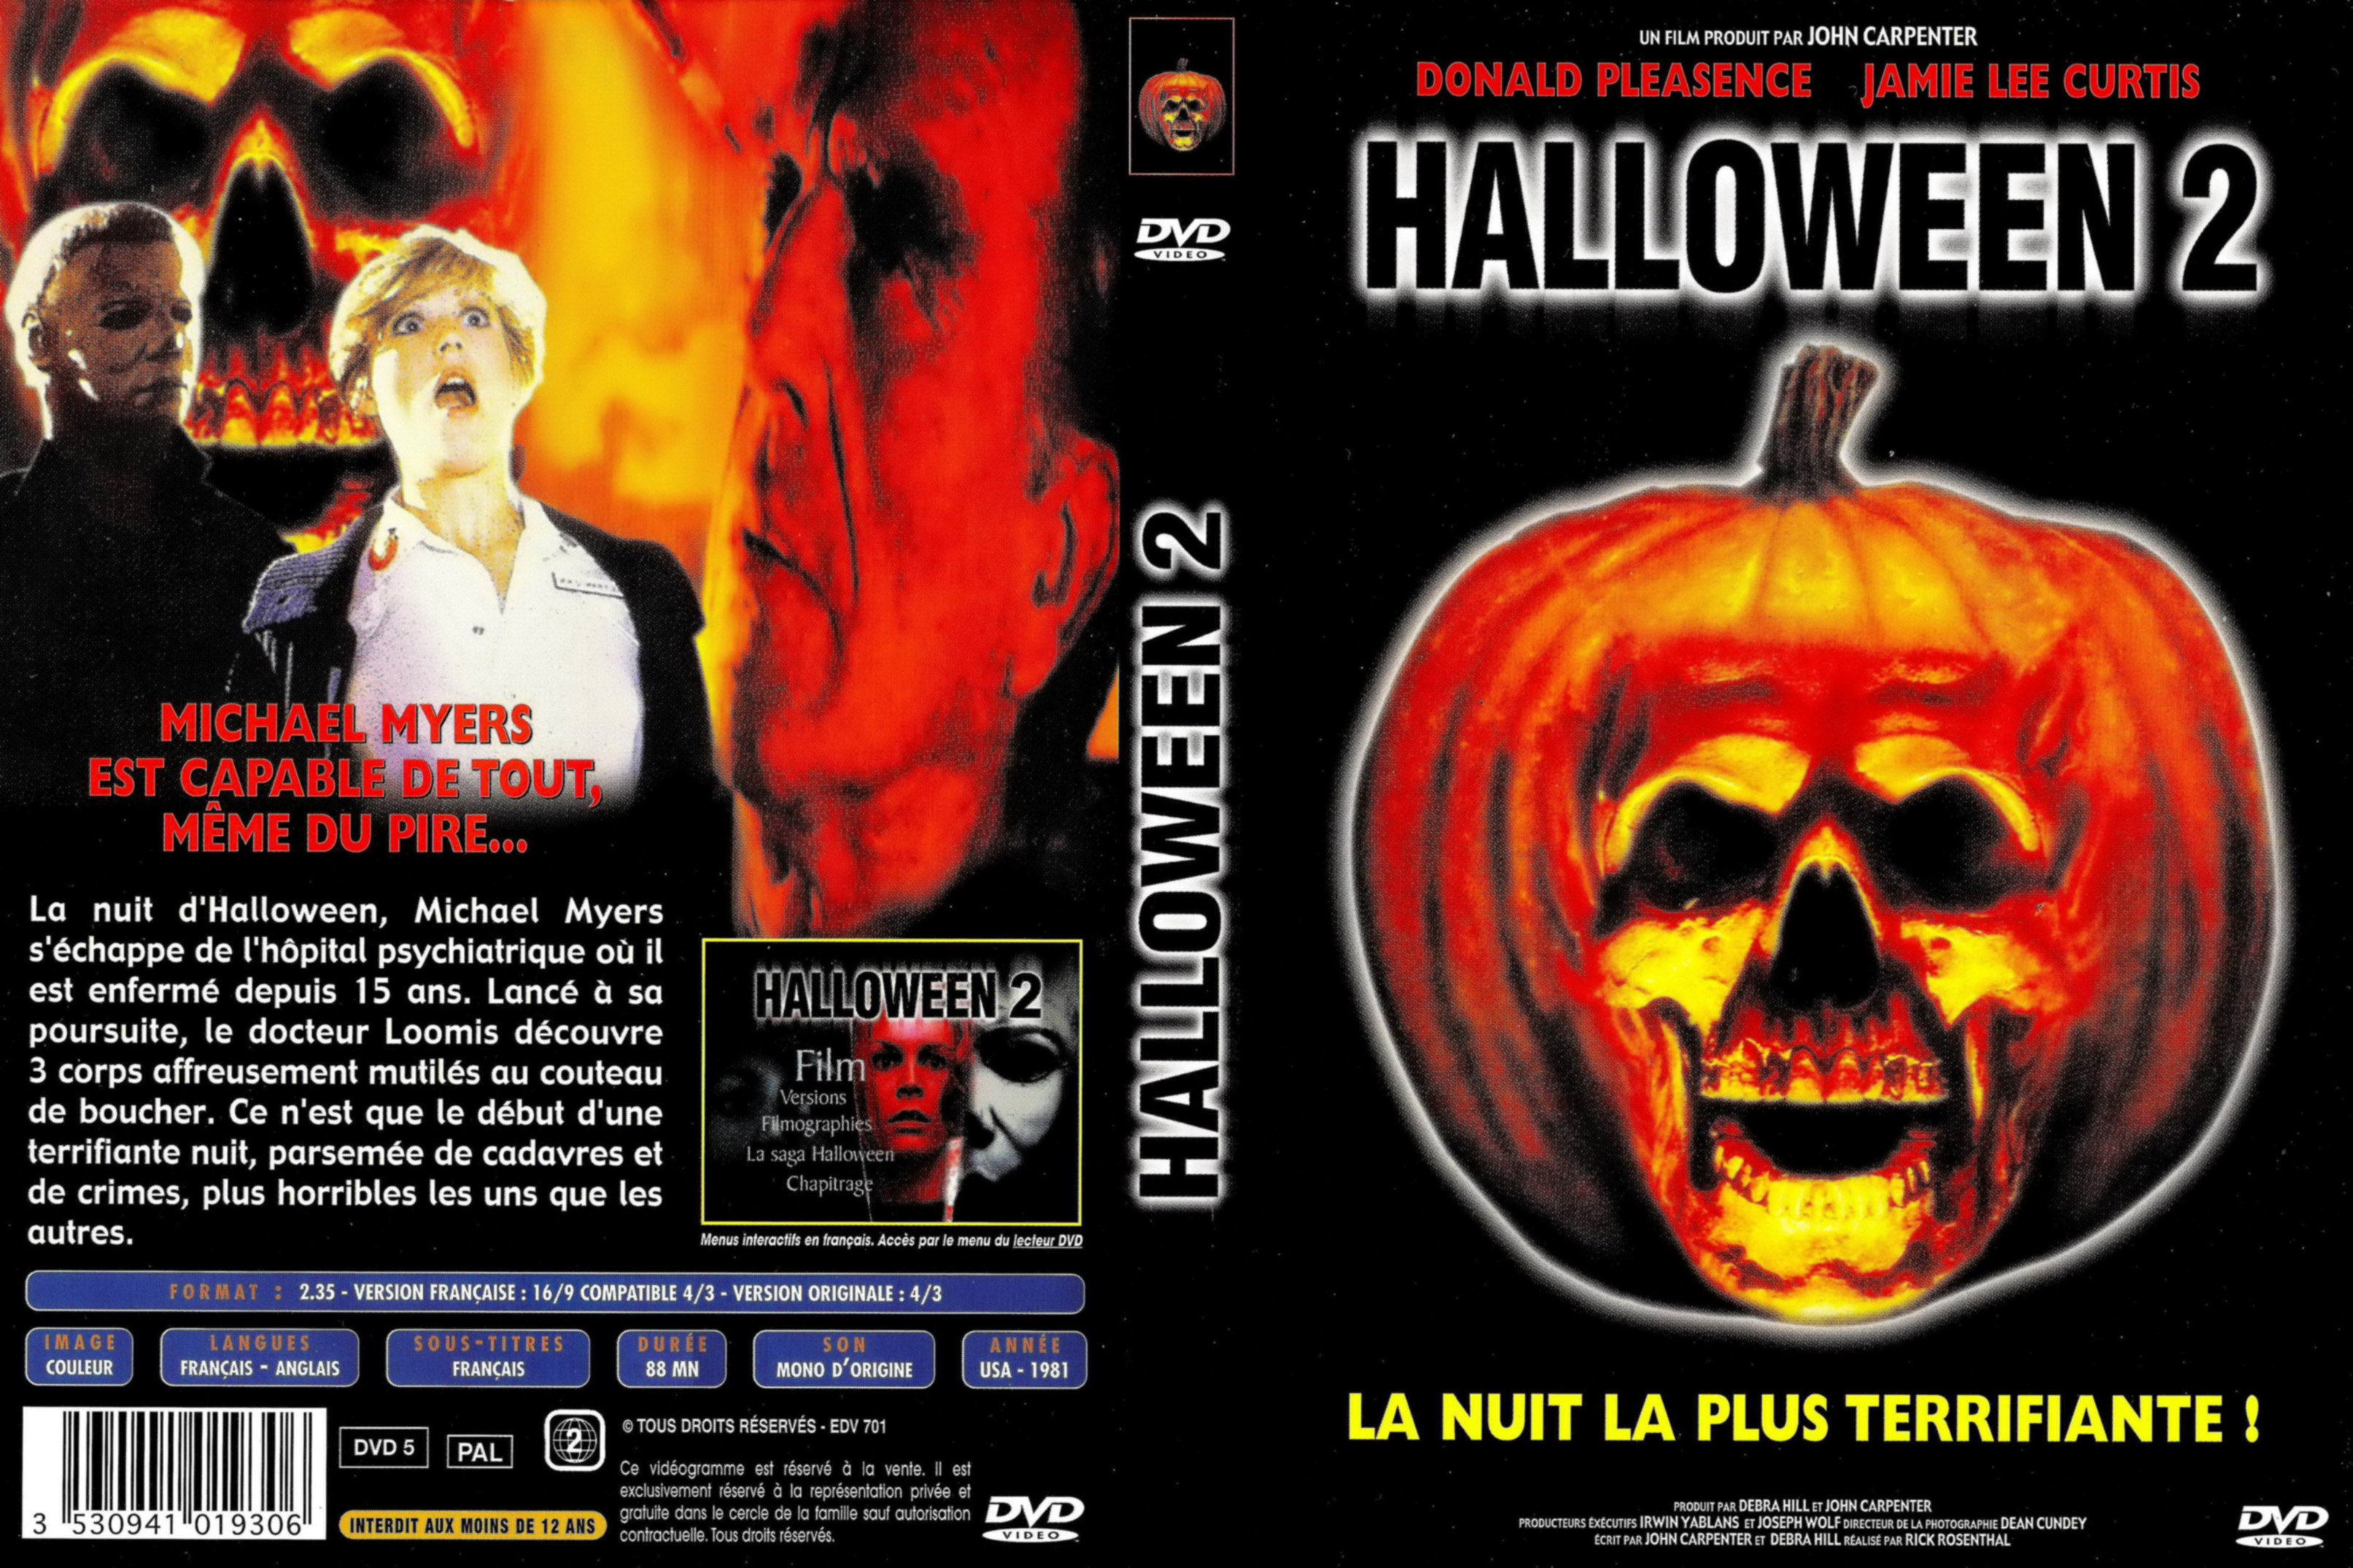 Jaquette DVD Halloween 2 v3